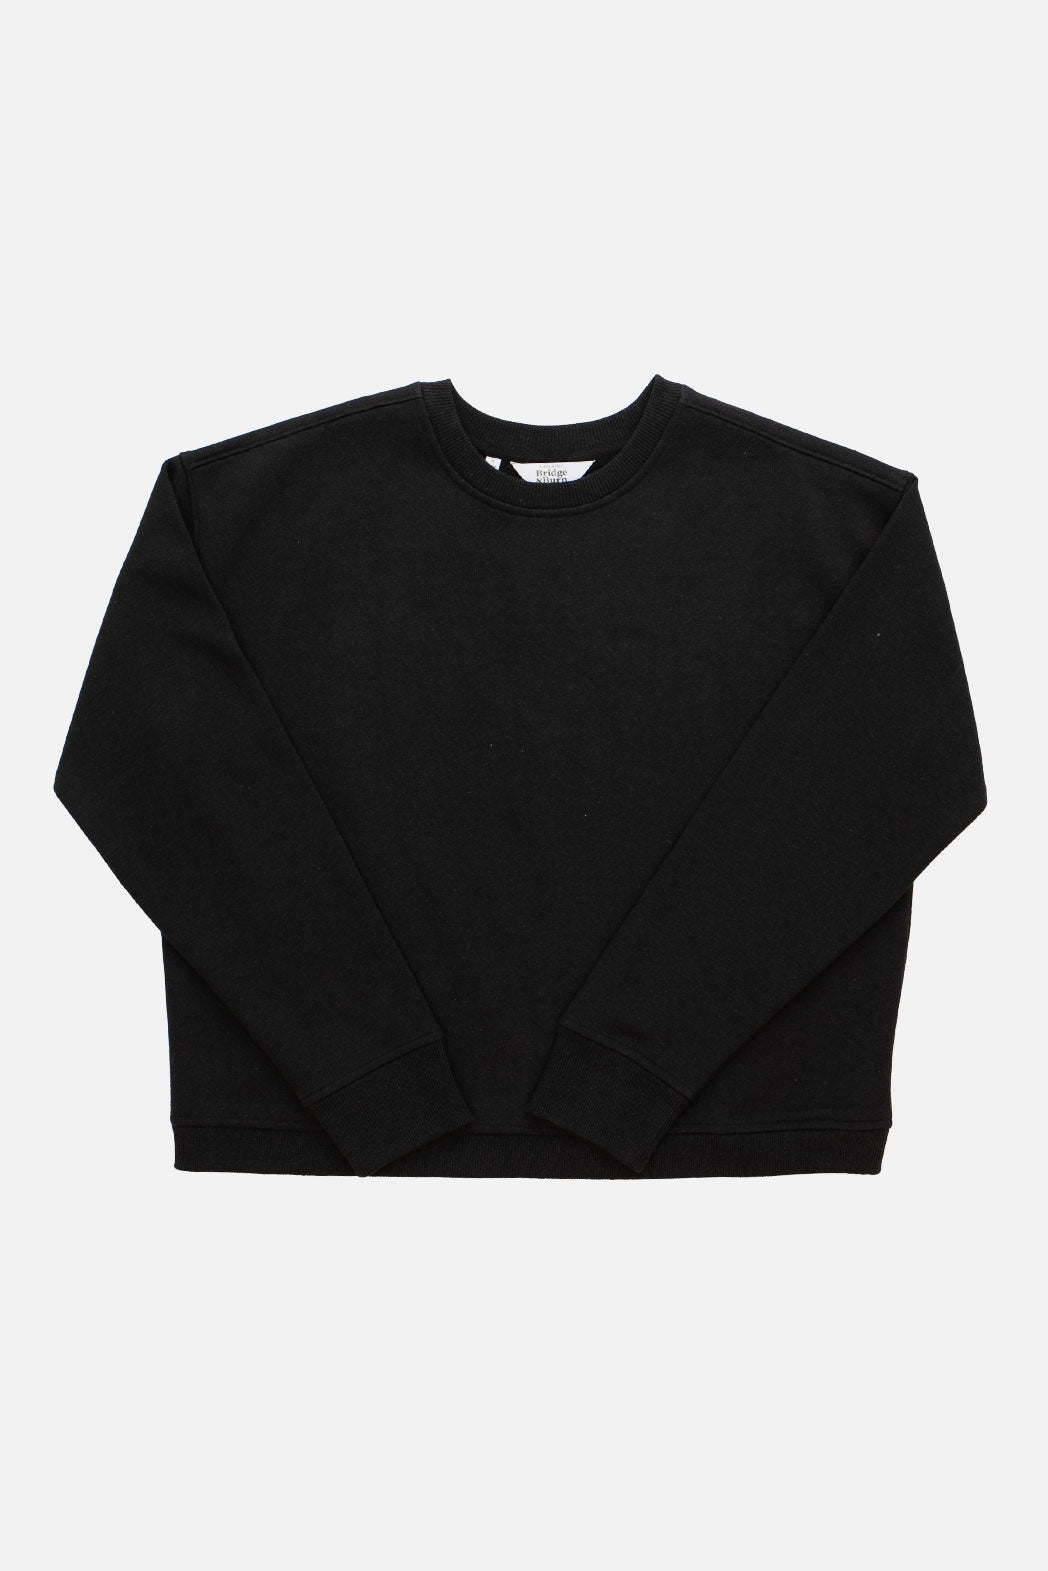 Hawthorne Black Boxy Fit, Cropped Organic Sweatshirt – Bridge & Burn